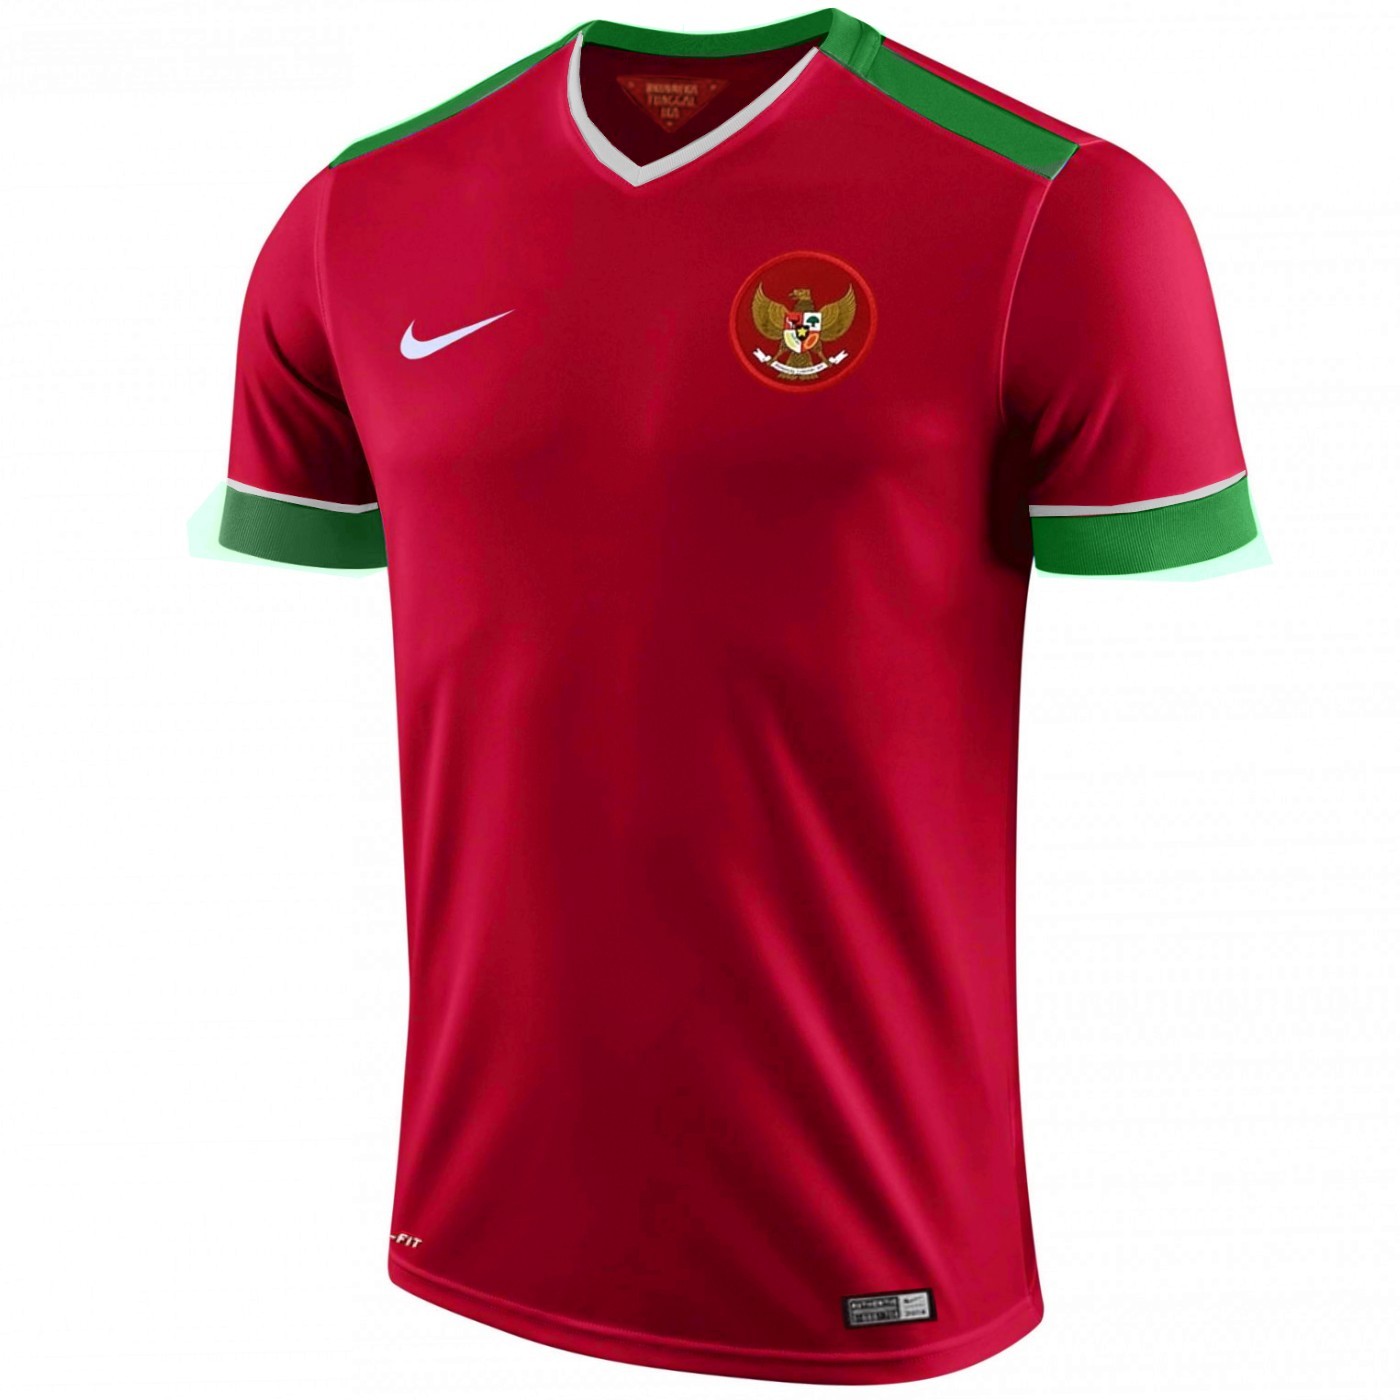 Buy Indonesia Nike football shirt